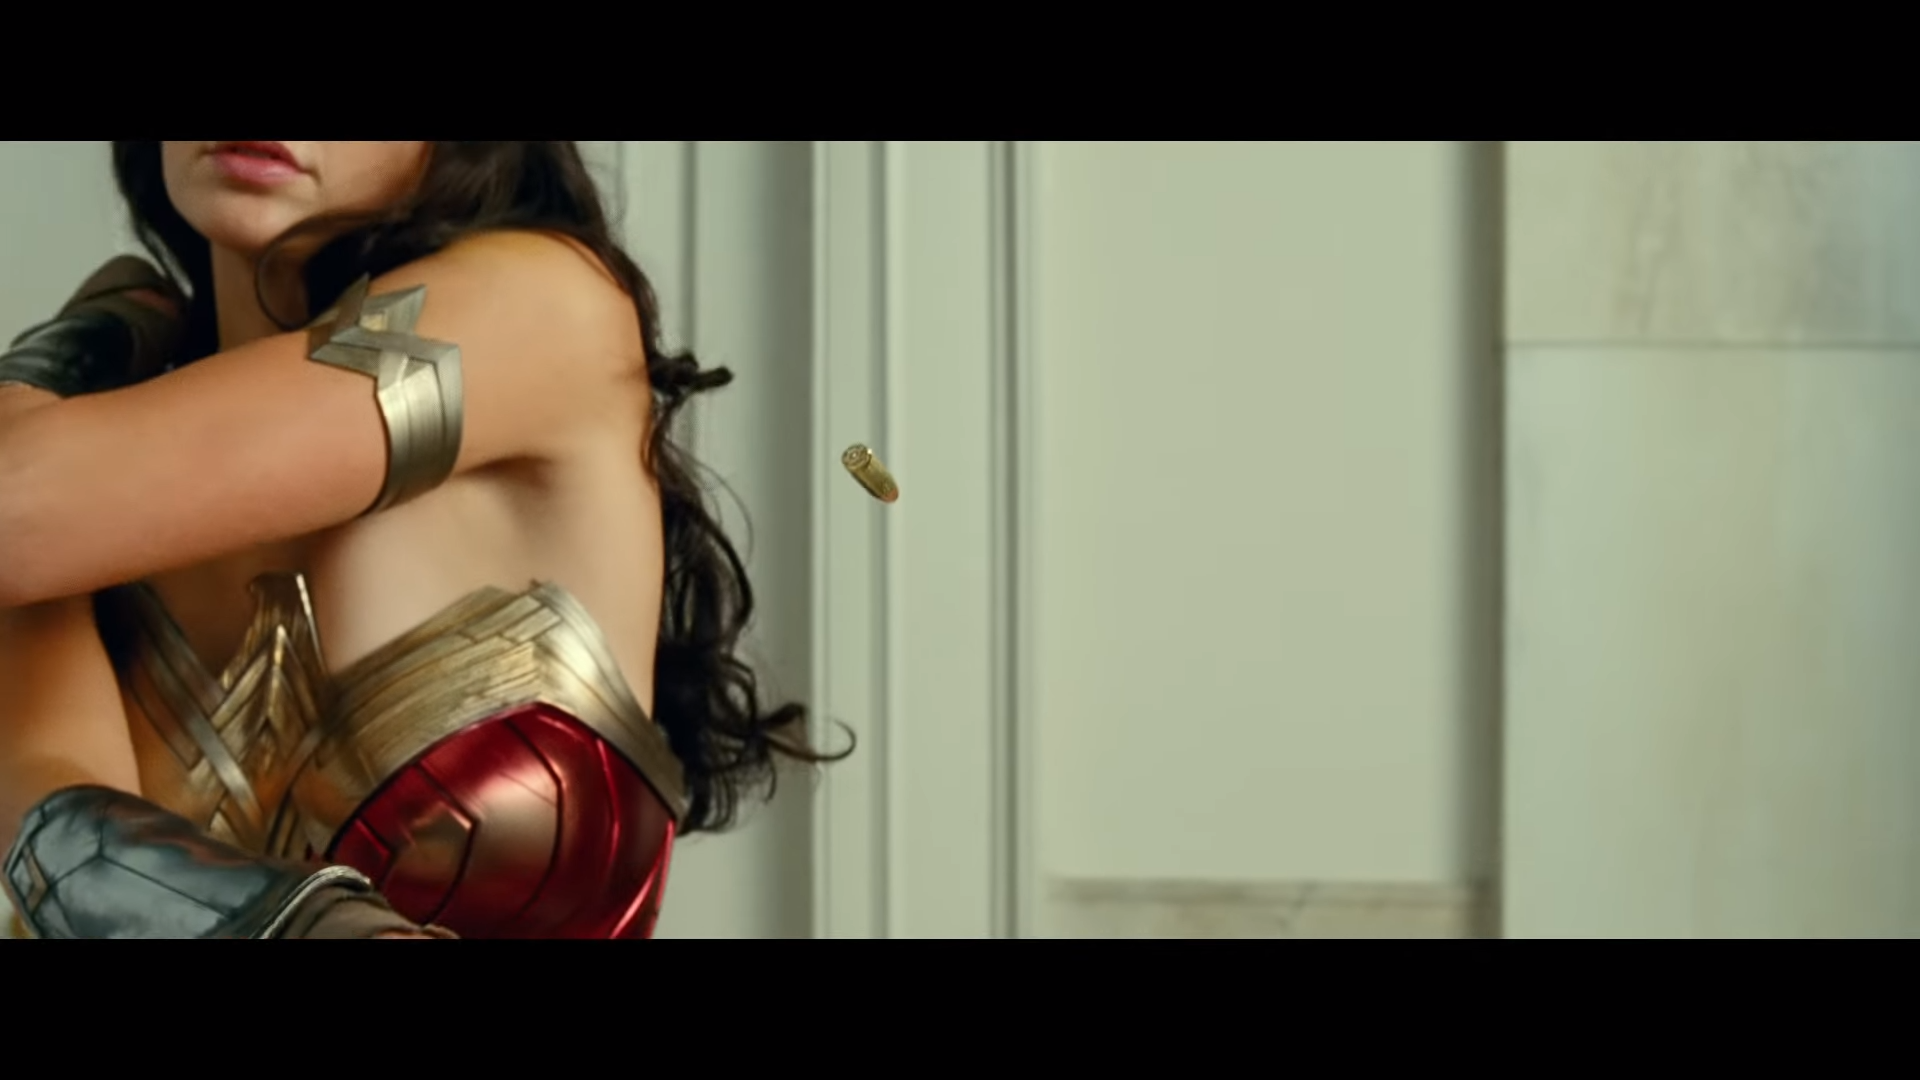 Olga Kurylenko (Oblivion) was in the running to play Wonder Woman in Batman...